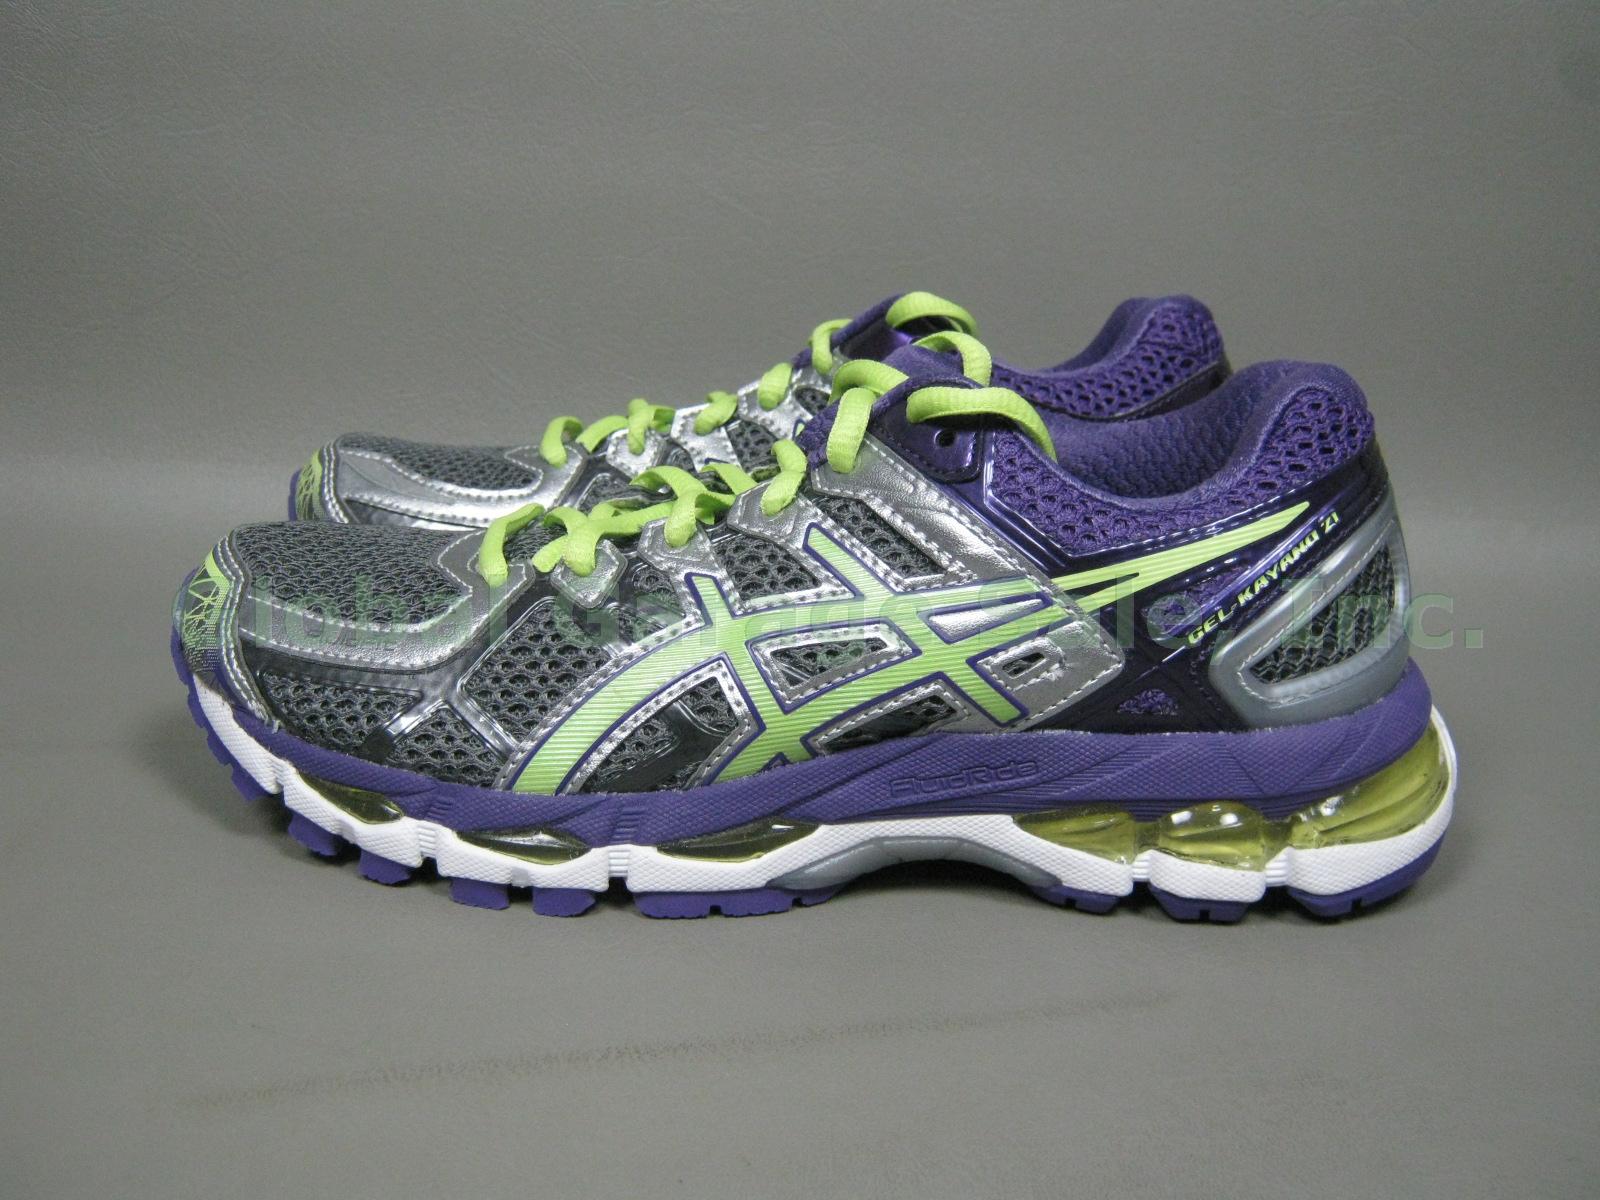 NEW Asics Womens Gel Kayano 21 Running Shoes US 6 EUR 37 Charcoal Green Purple 2